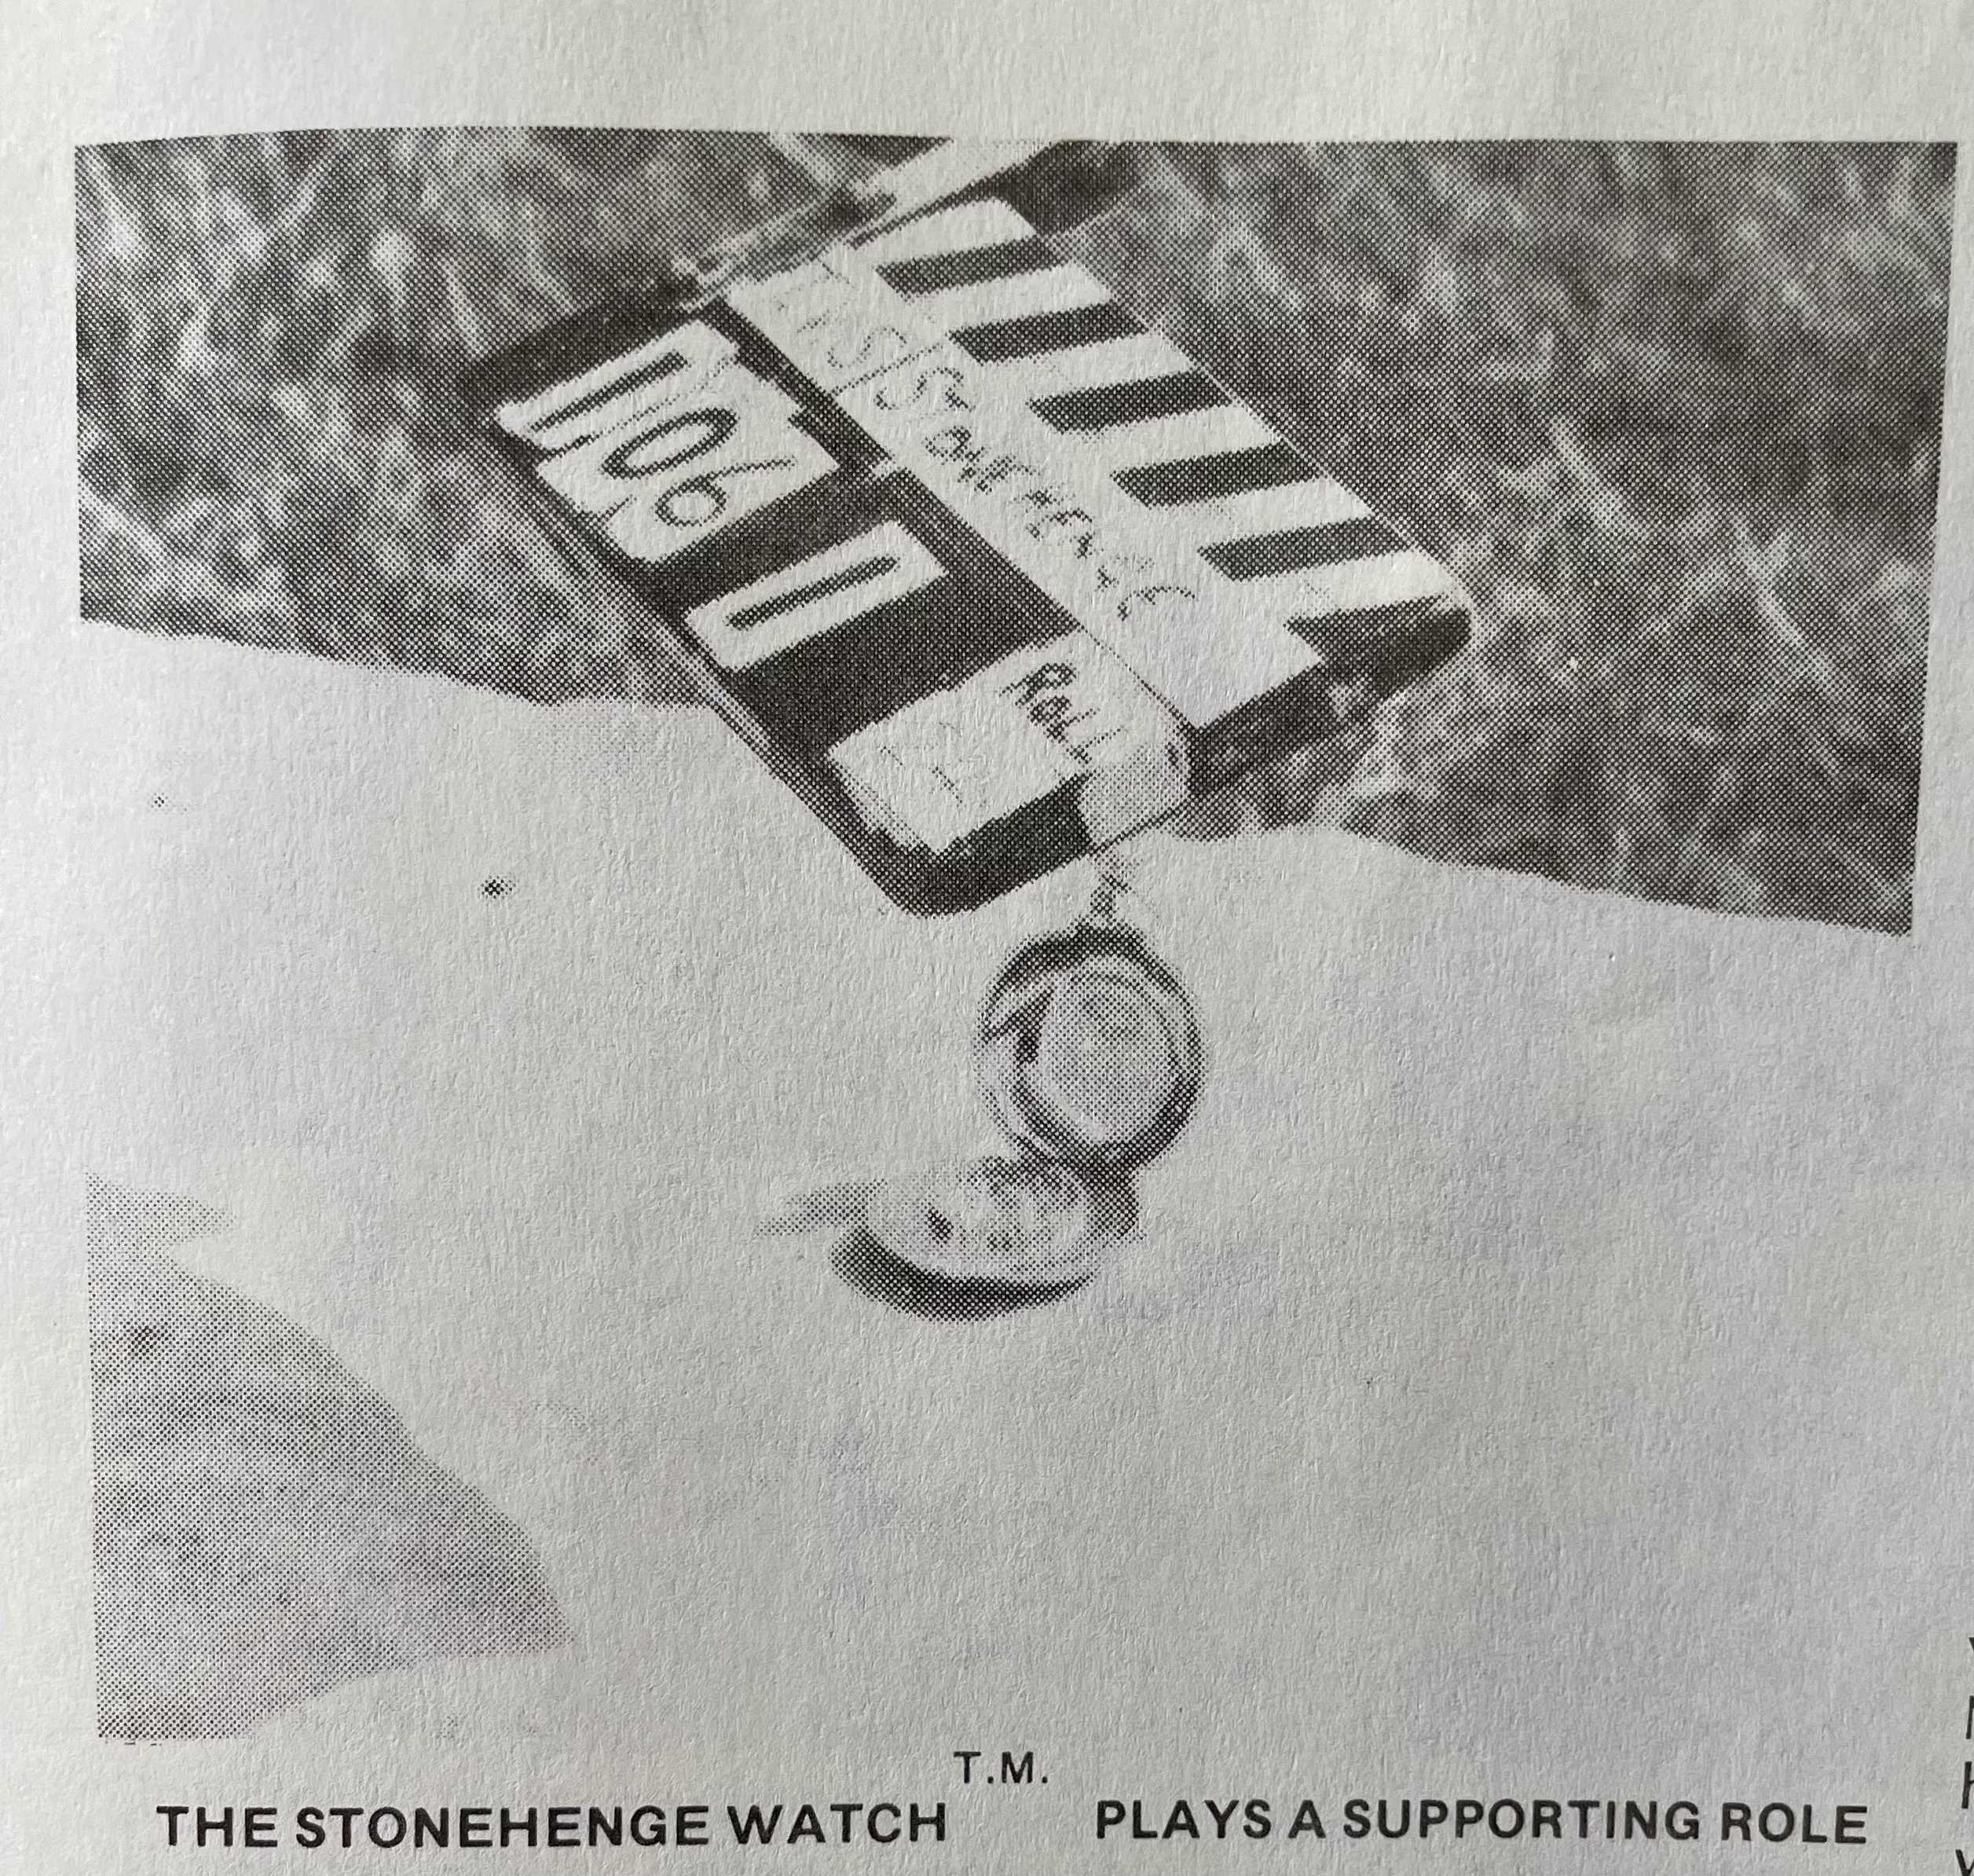 Stonehenge Watch On Bluestone at Stonehenge1n 1983